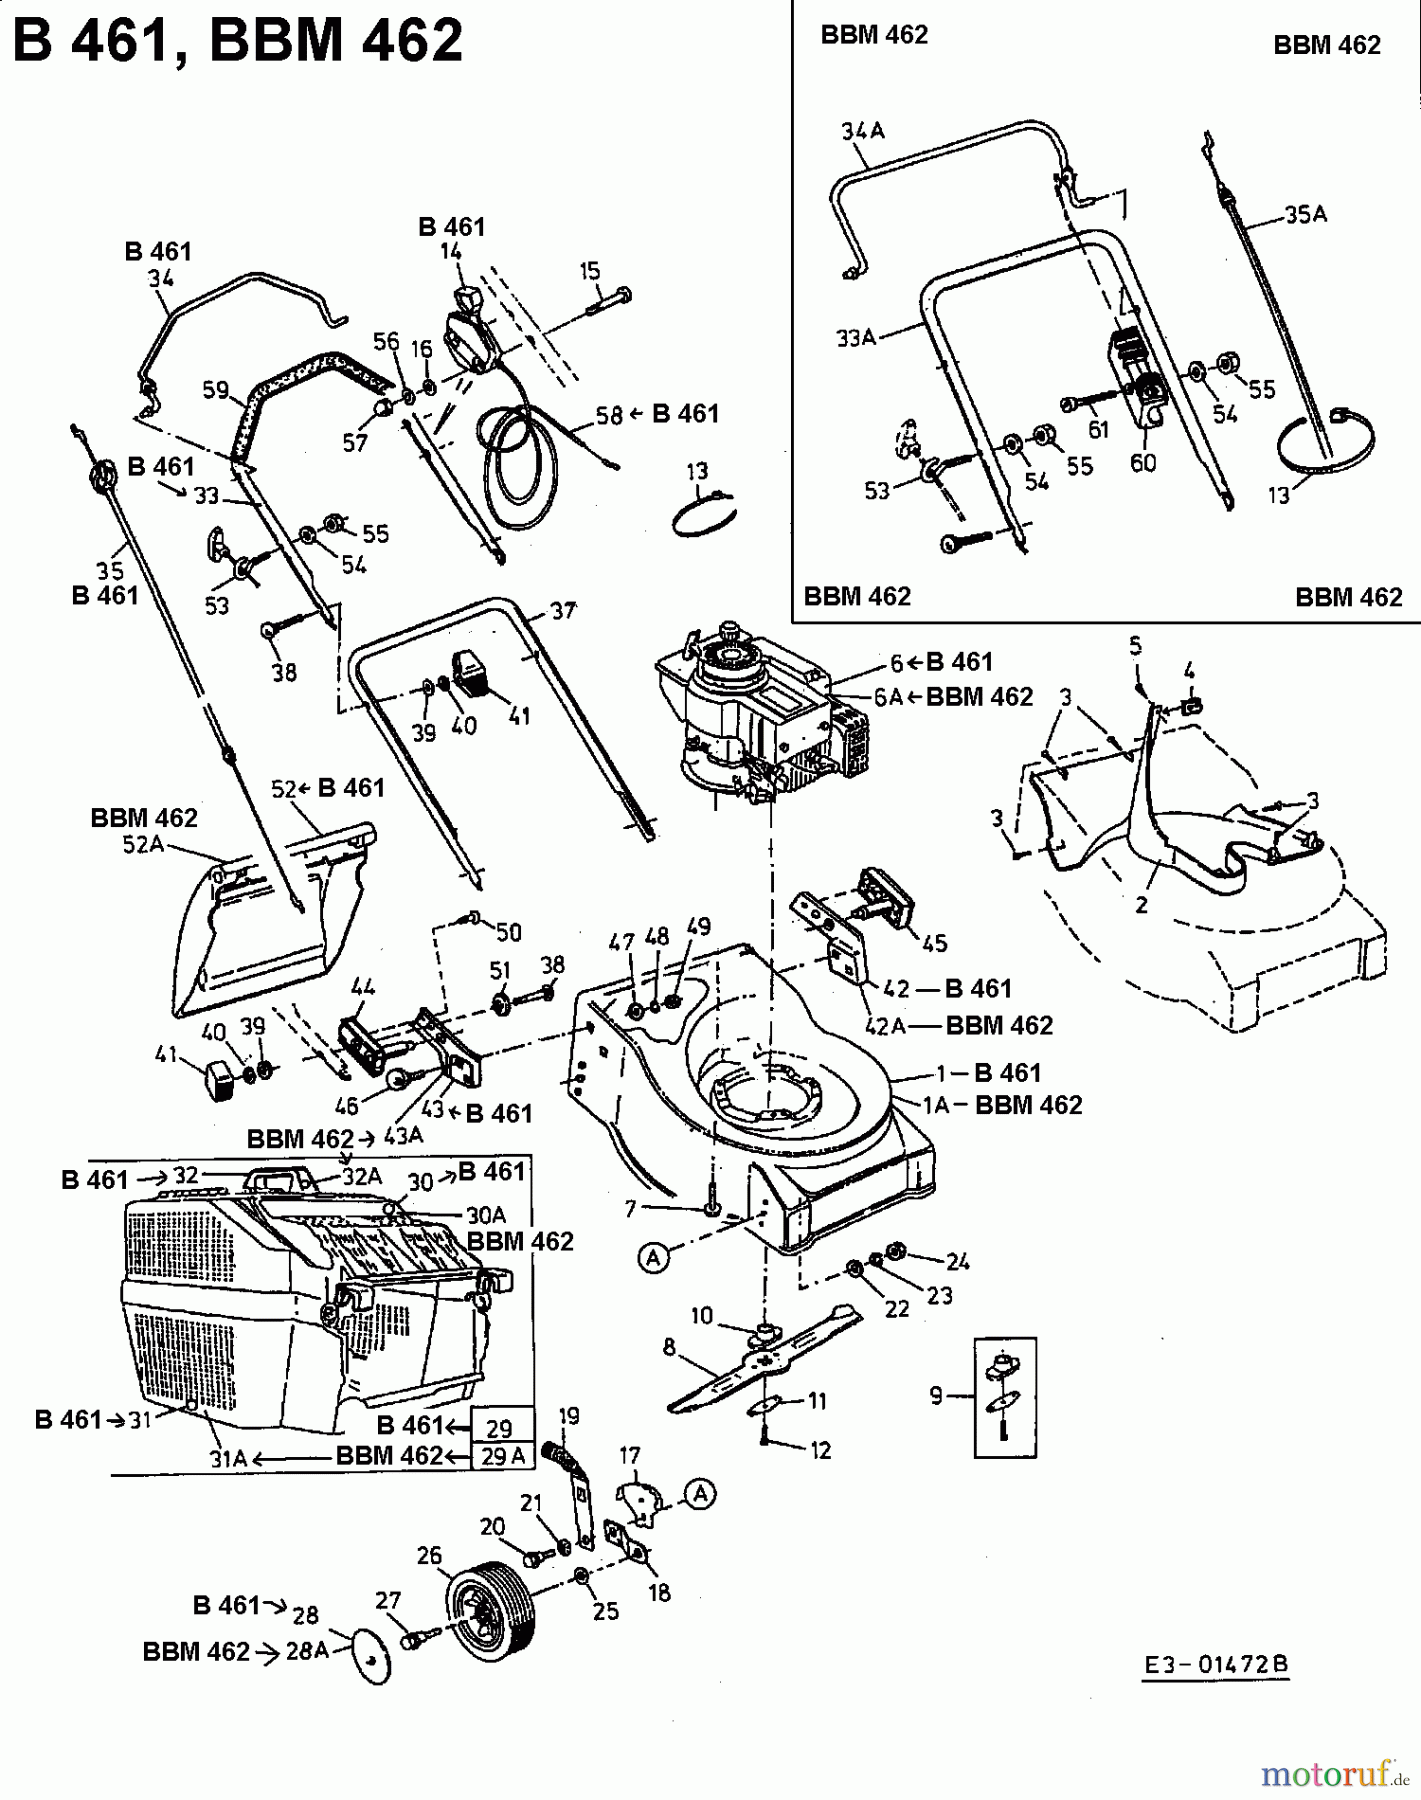  Budget Petrol mower BBM 462 11A-661A619  (2002) Basic machine